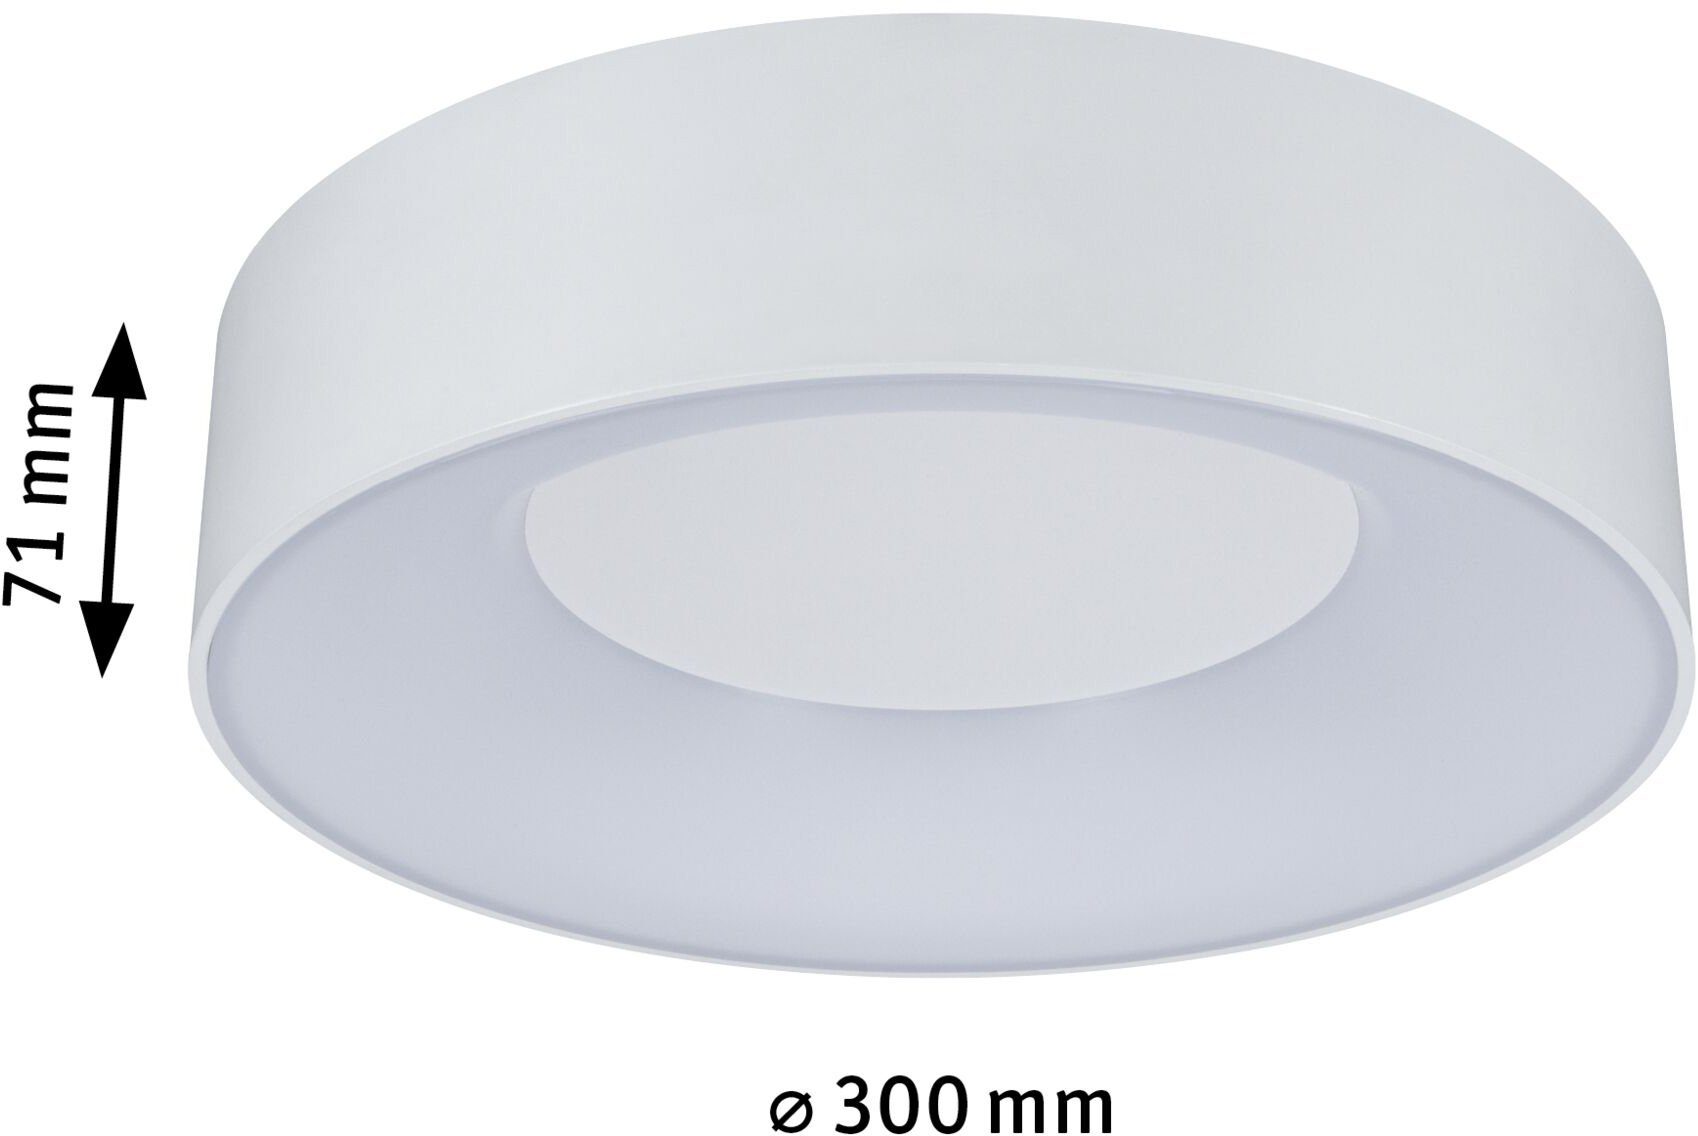 Paulmann Casca, Wandleuchte Tageslichtweiß, fest integriert, LED Badezimmerleuchte